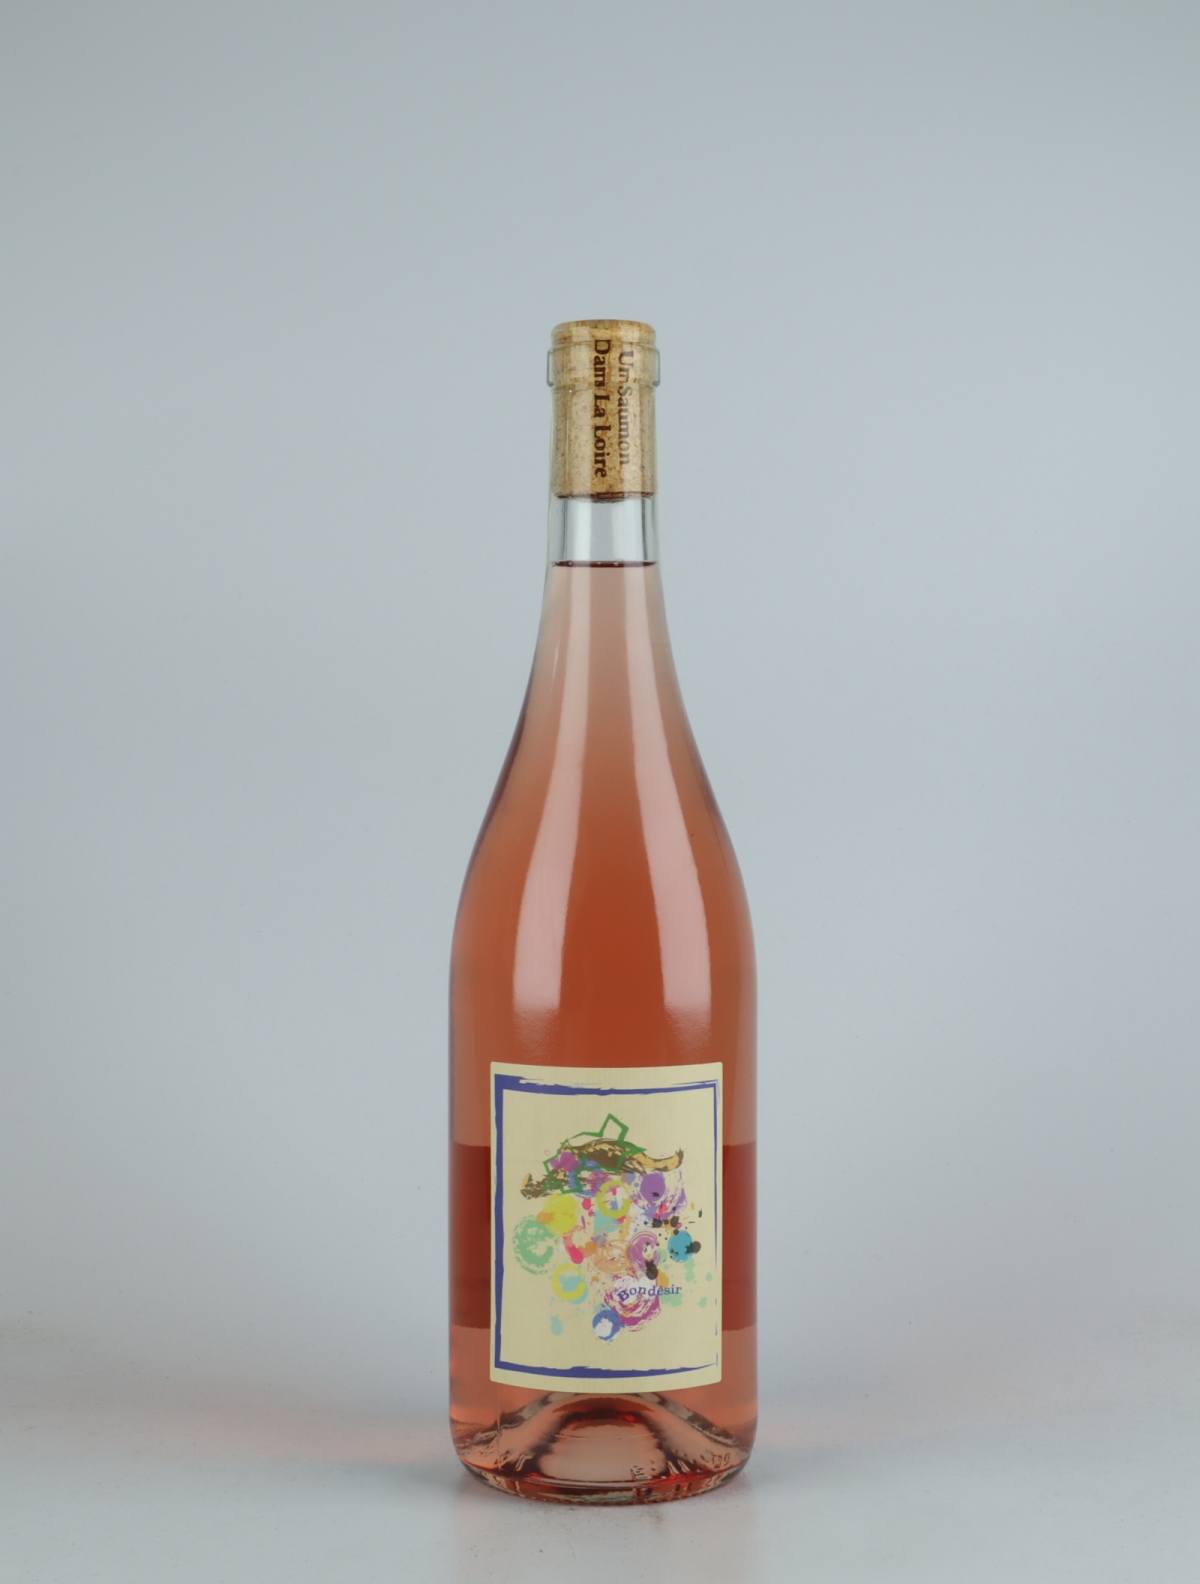 En flaske 2021 Bondésir - Rosé - Vin de Frantz Rosé fra Frantz Saumon, Loire i Frankrig